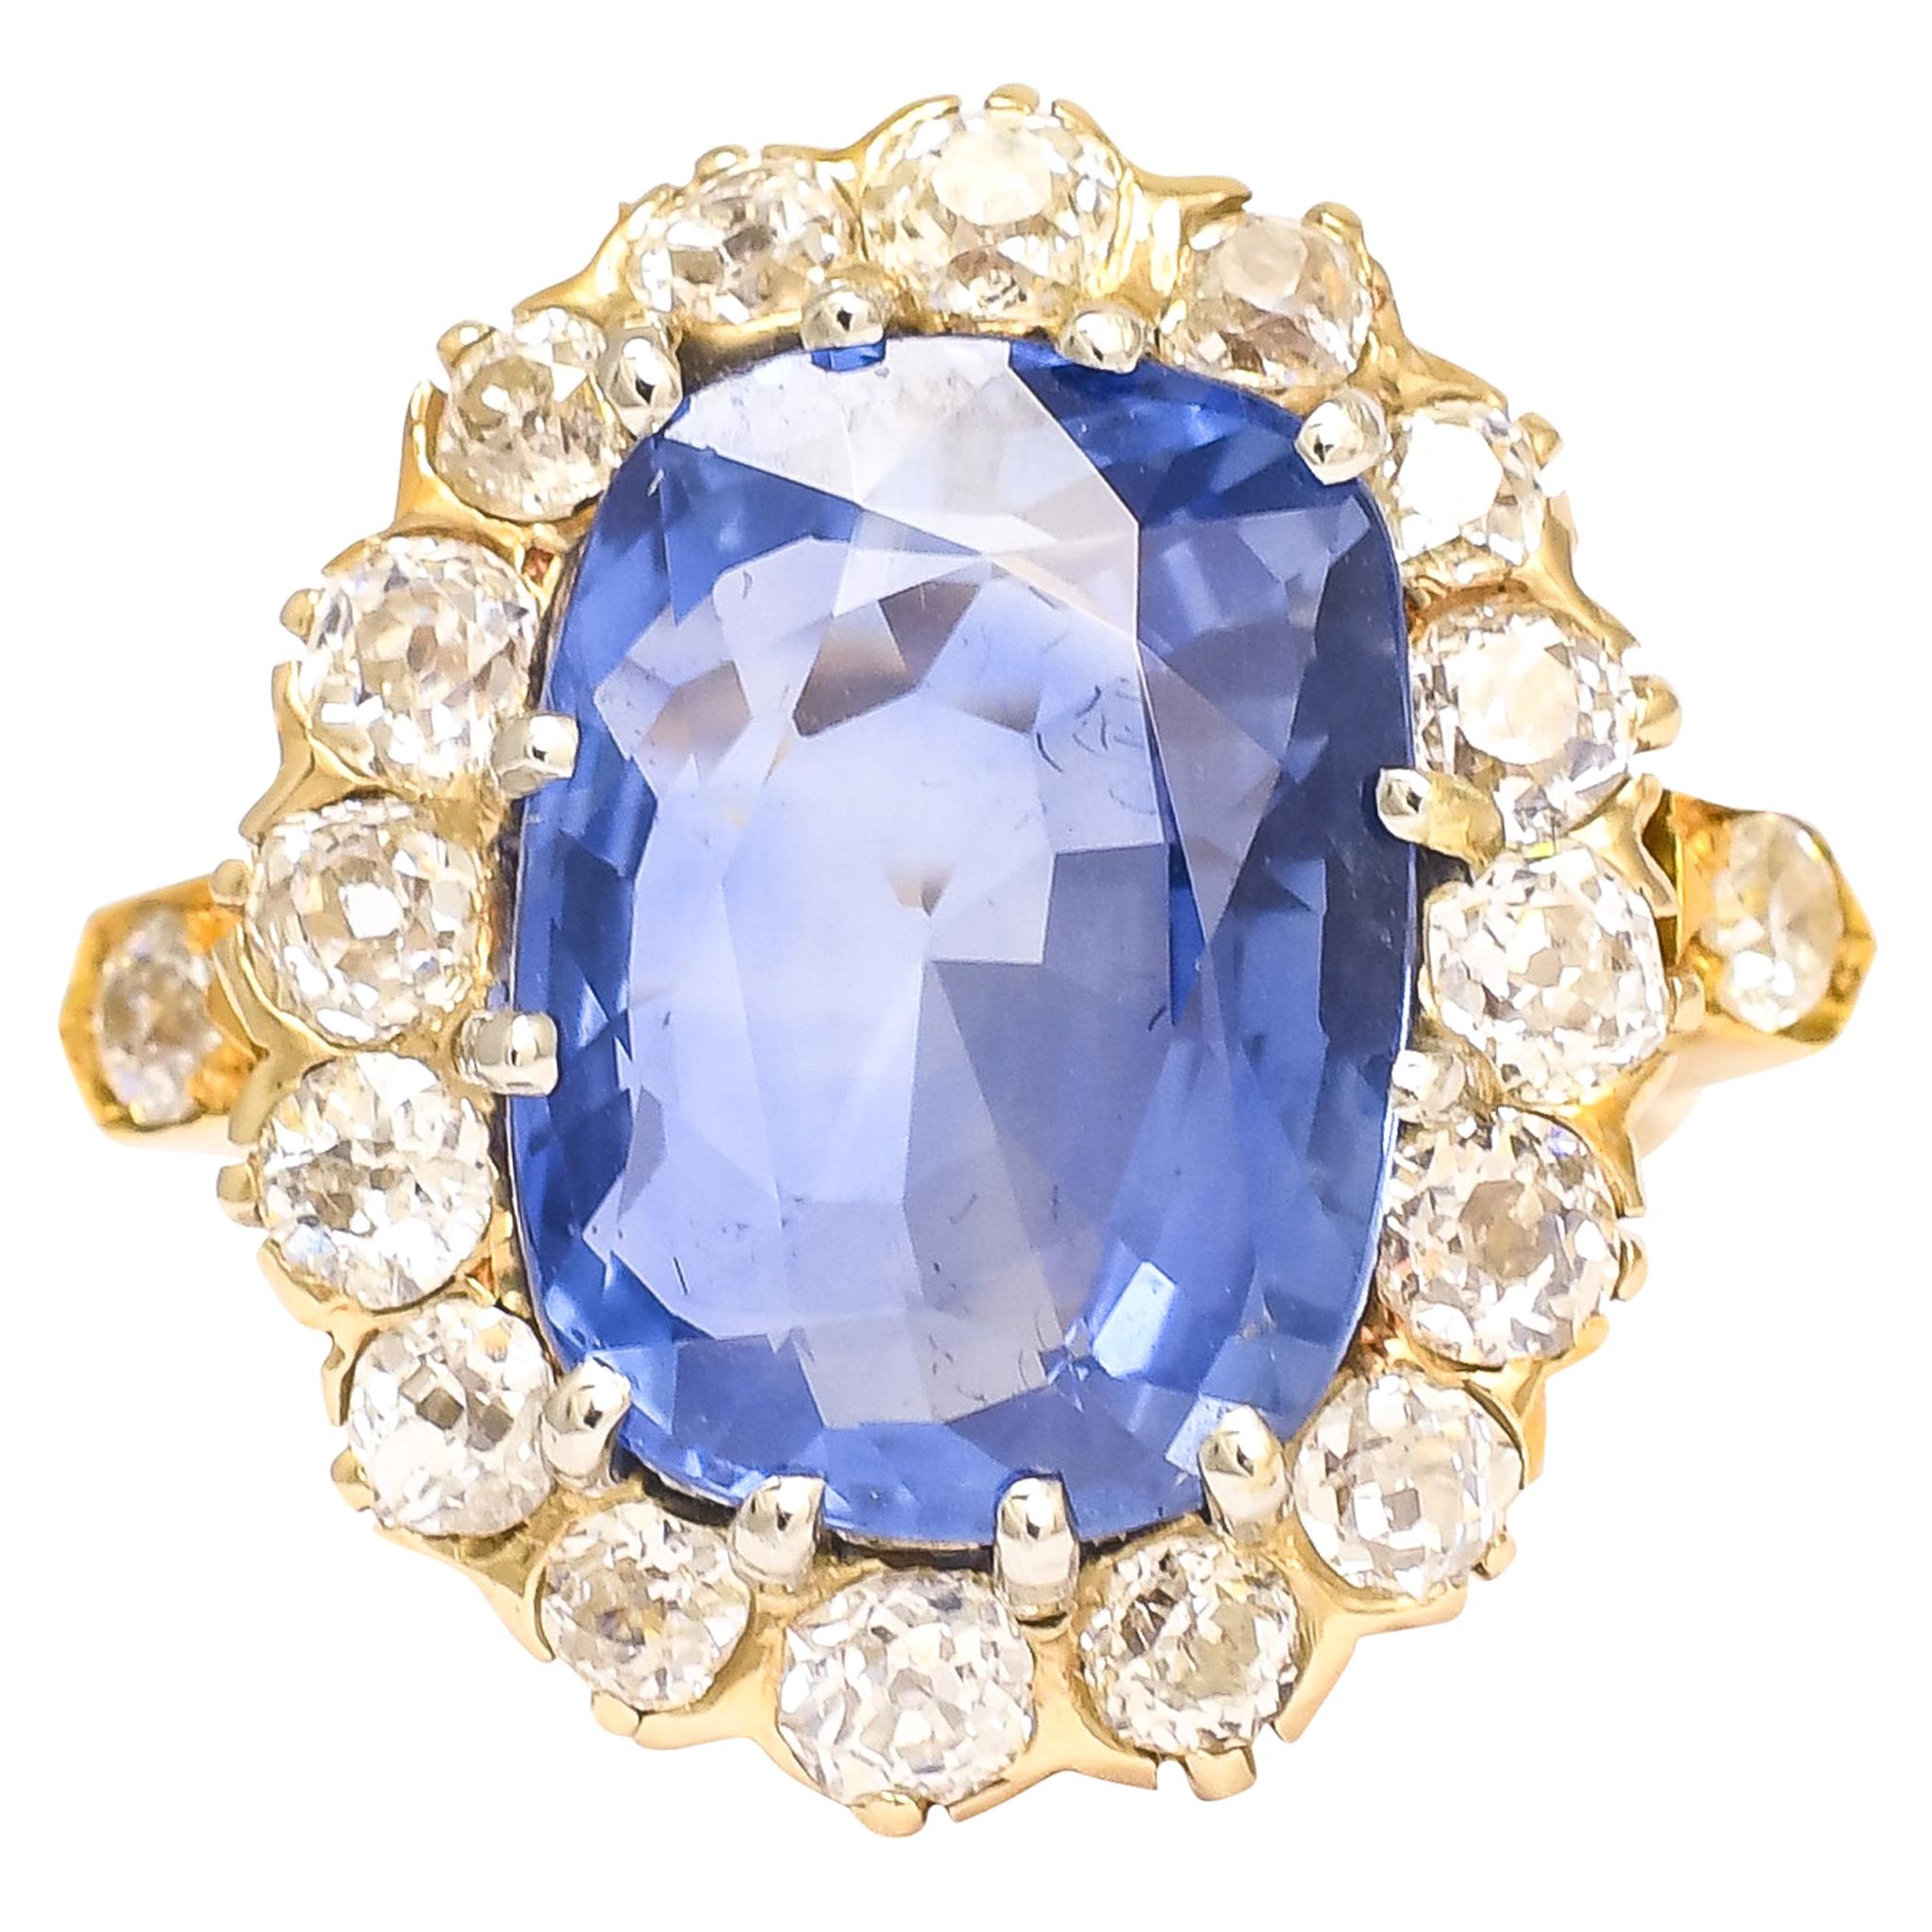 Antique Victorian 13.5 Carat Burma Sapphire Diamond Cluster Ring For Sale